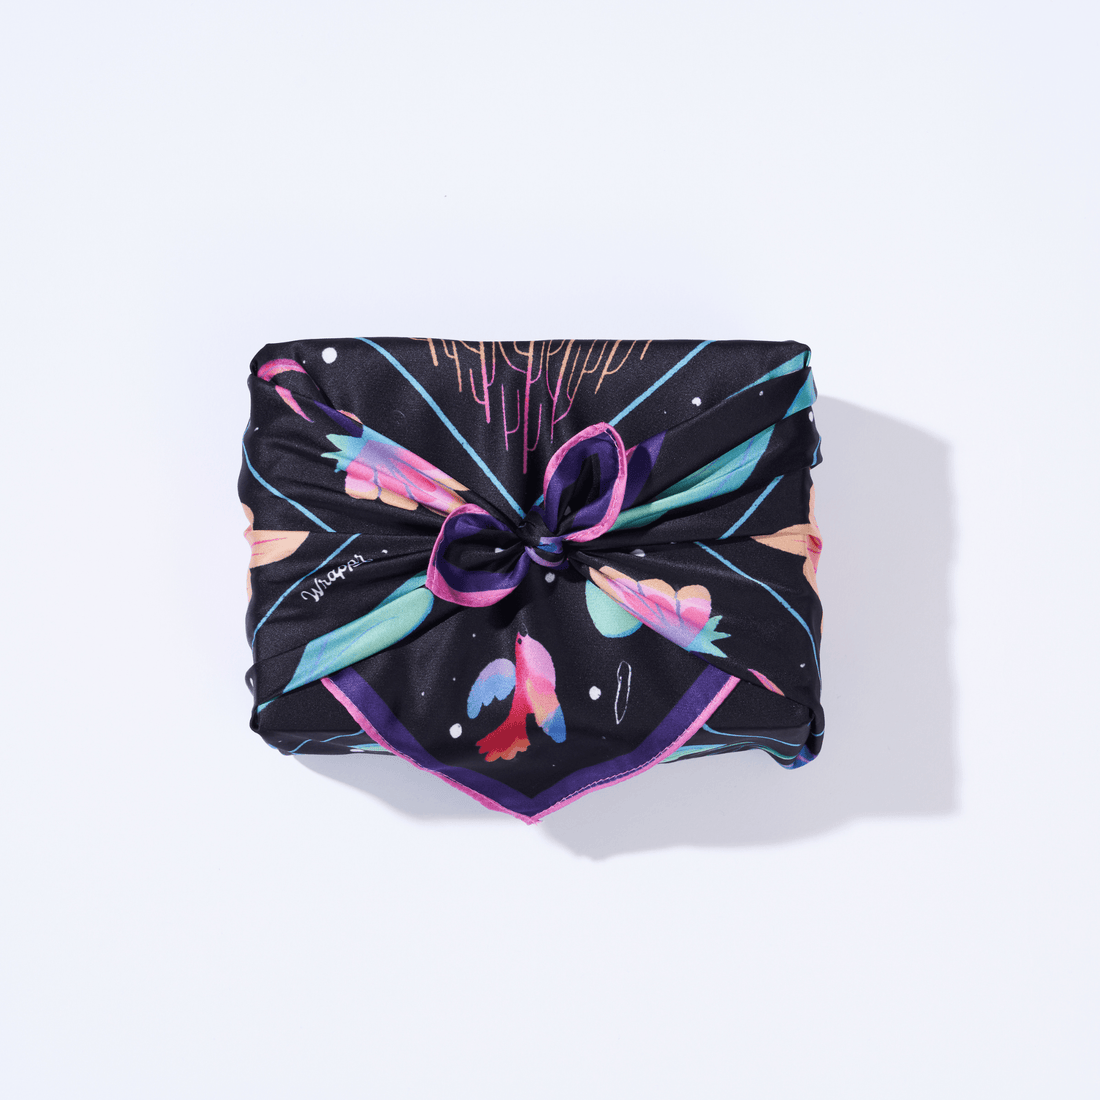 Limitless | 18" Furoshiki Gift Wrap by Nina Ramos - Wrappr